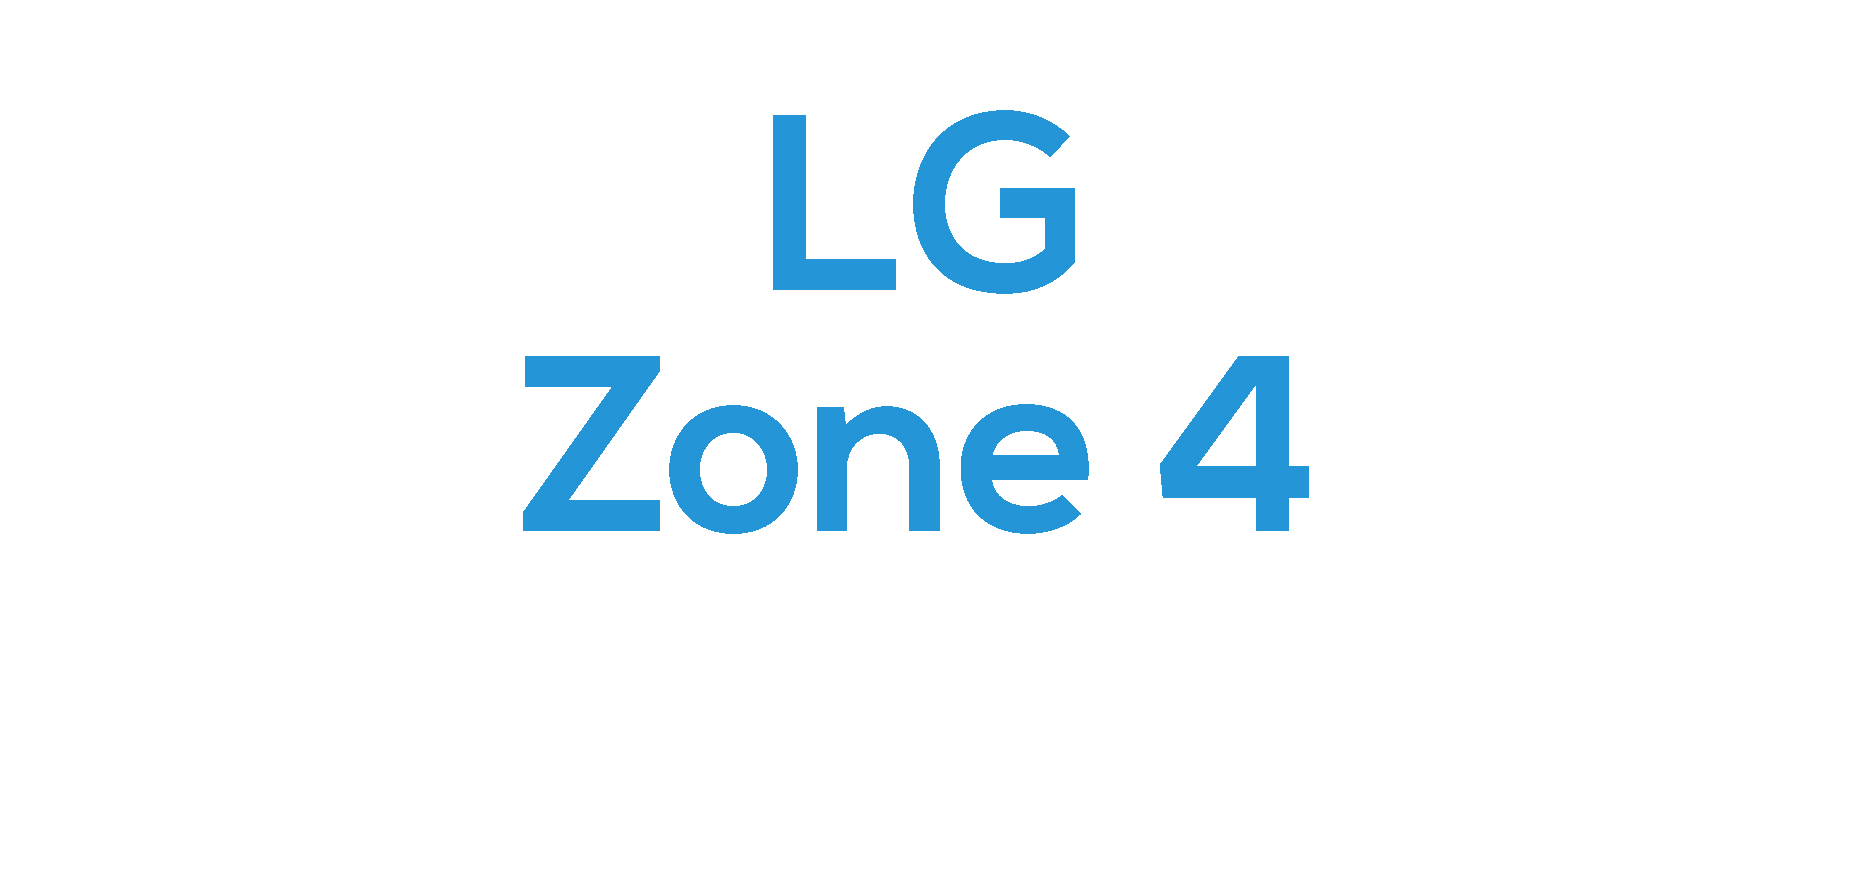 LG Zone 4